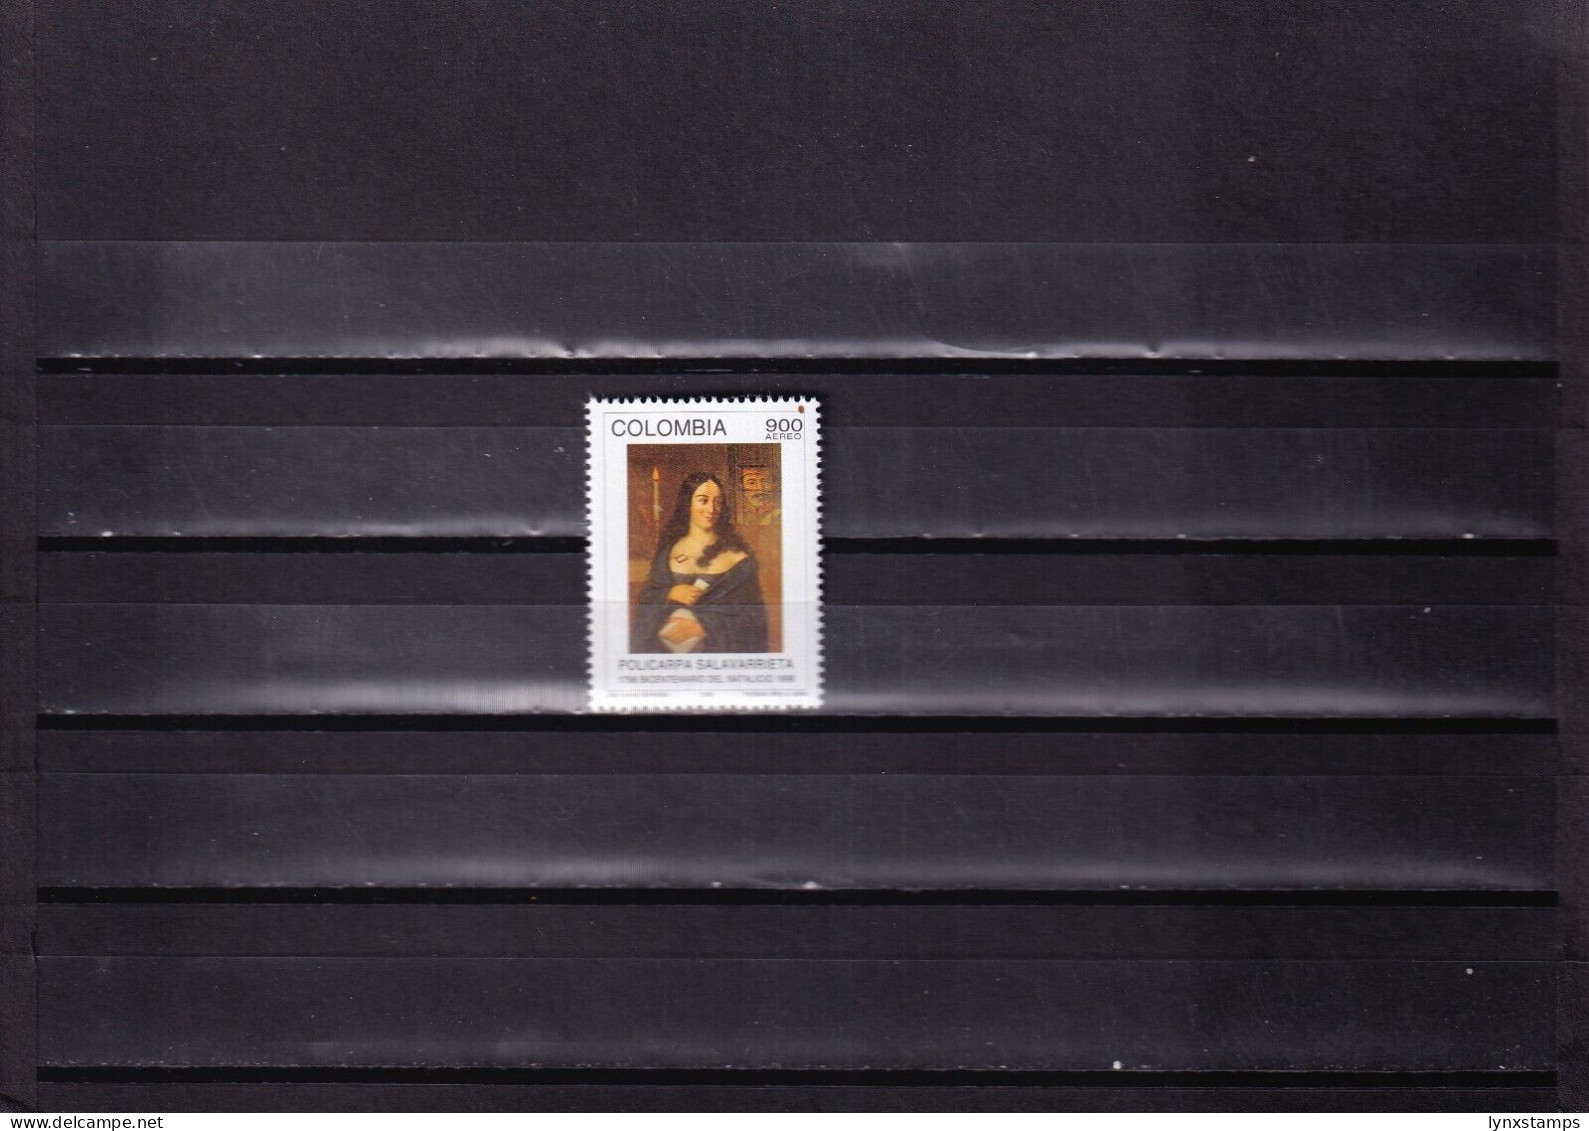 ER03 Colombia 1996 Policarpa Salavarrieta MNH Stamp - Kolumbien